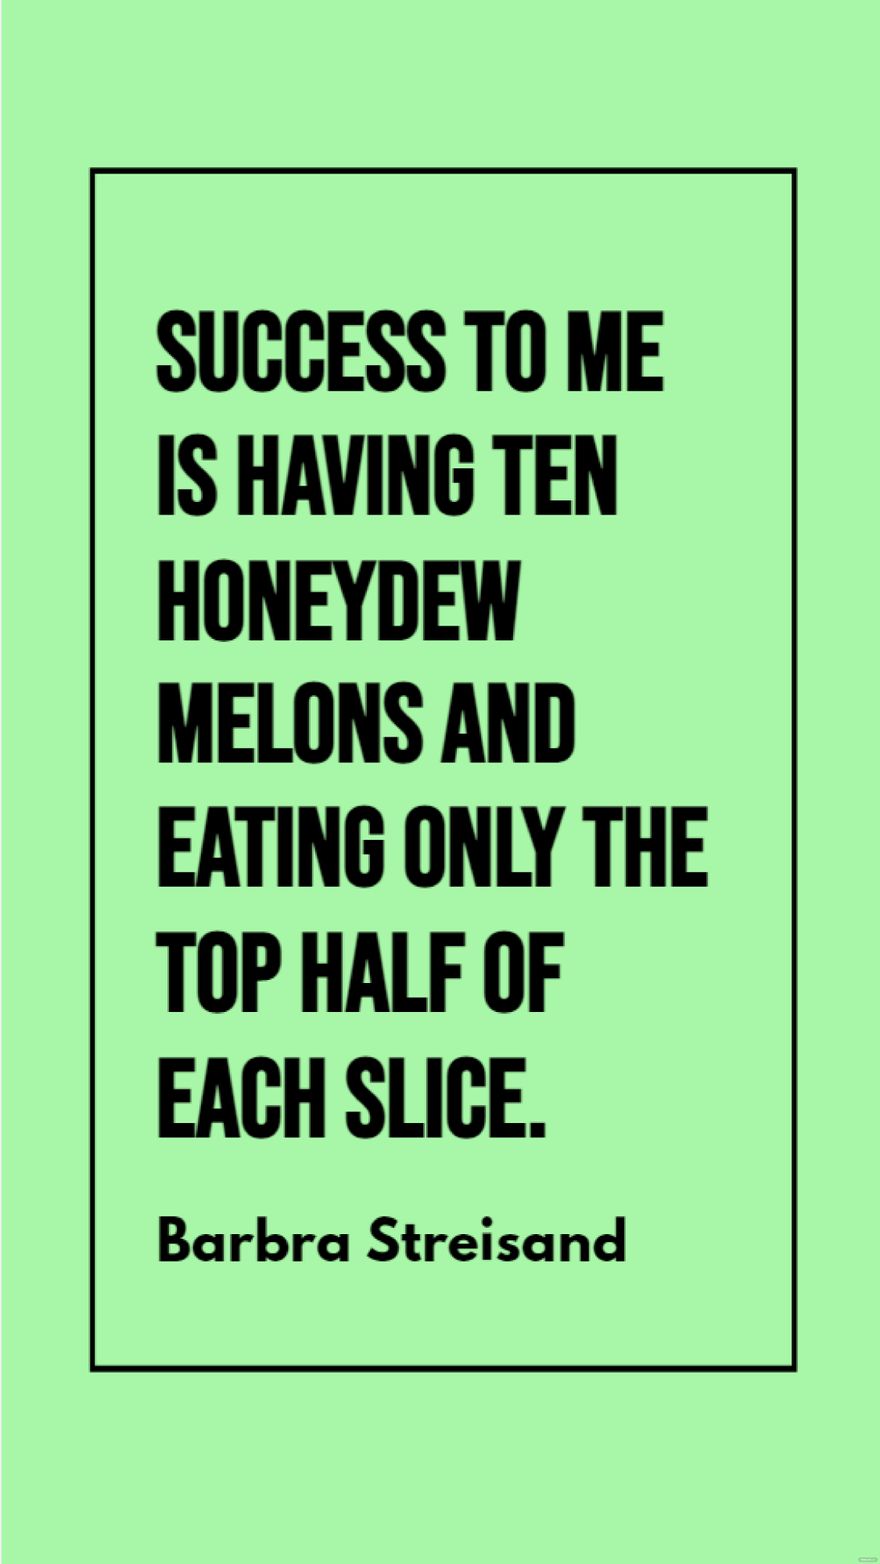 Barbra Streisand - Success to me is having ten honeydew melons and eating only the top half of each slice. in JPG